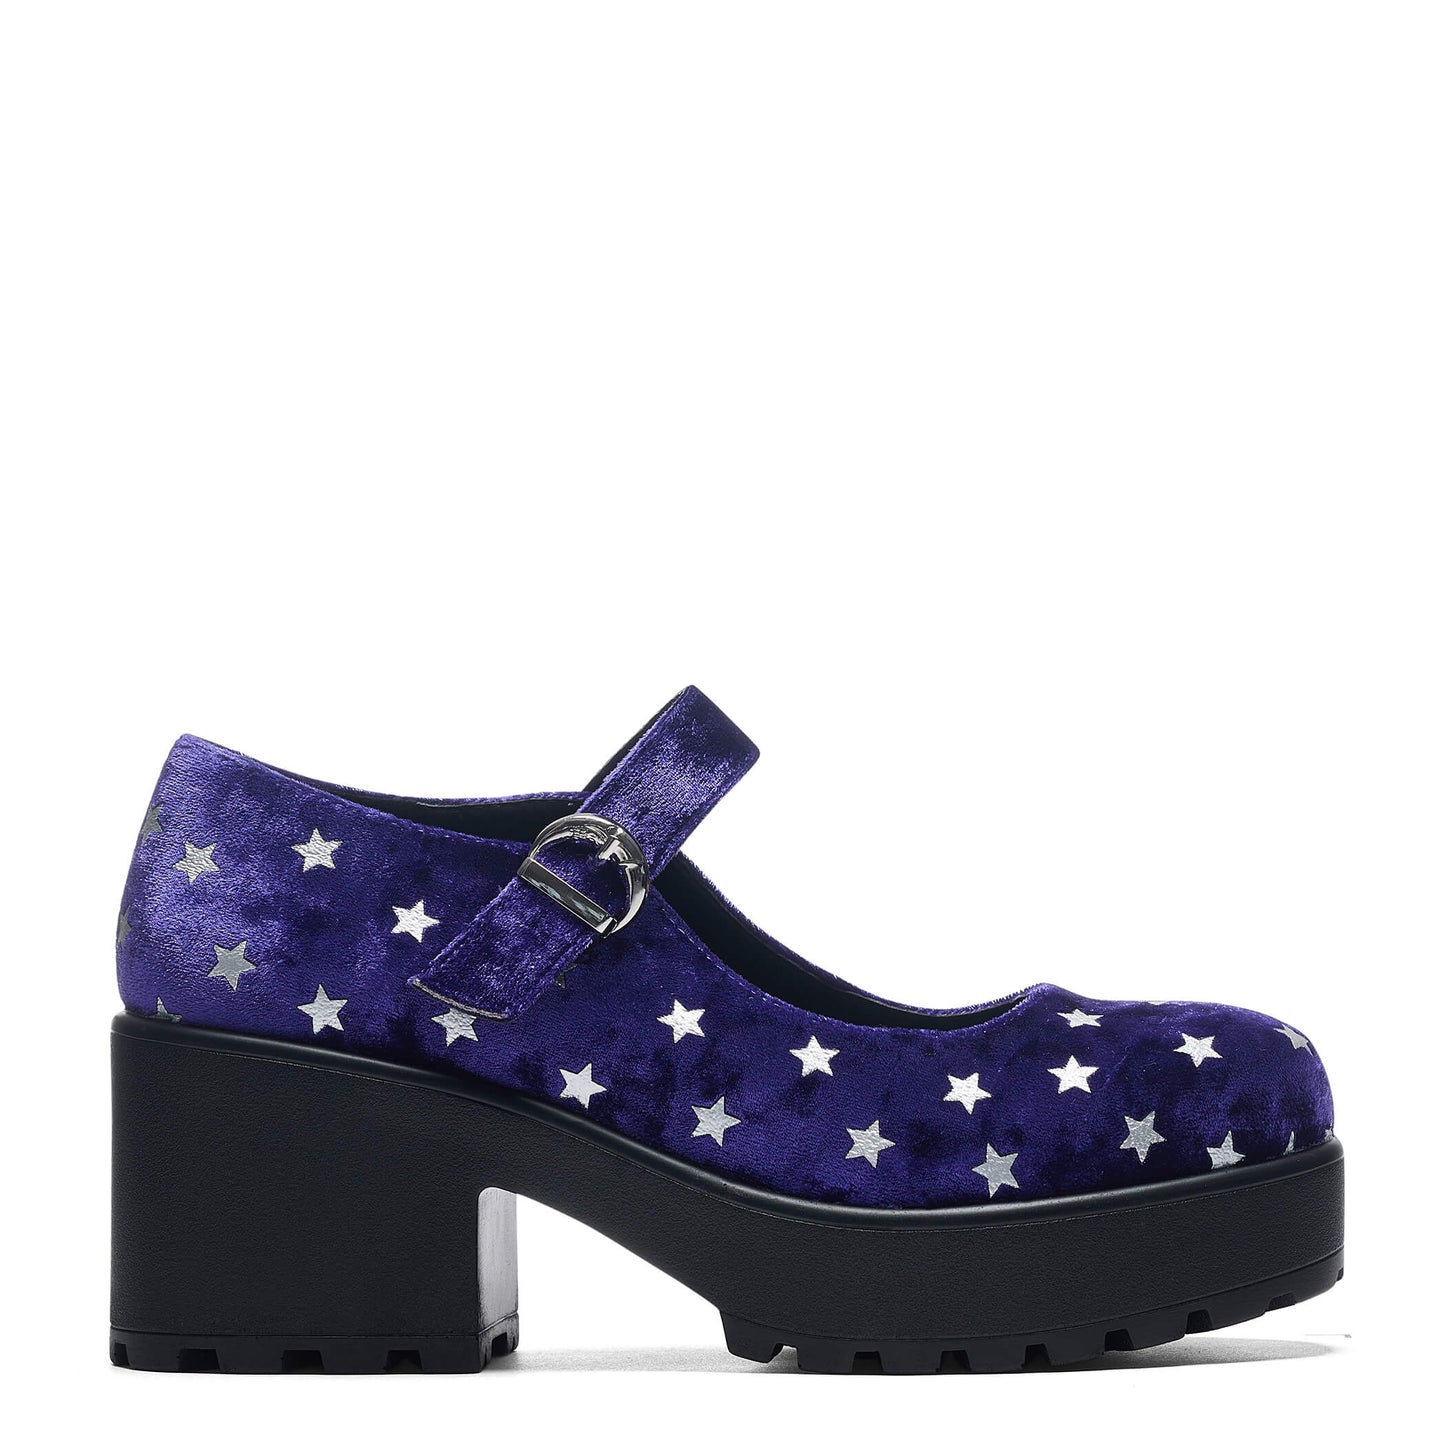 Tira Spellbound Purple Mary Janes 'Celestial Dusk Edition' - Mary Janes - KOI Footwear - Purple - Side View